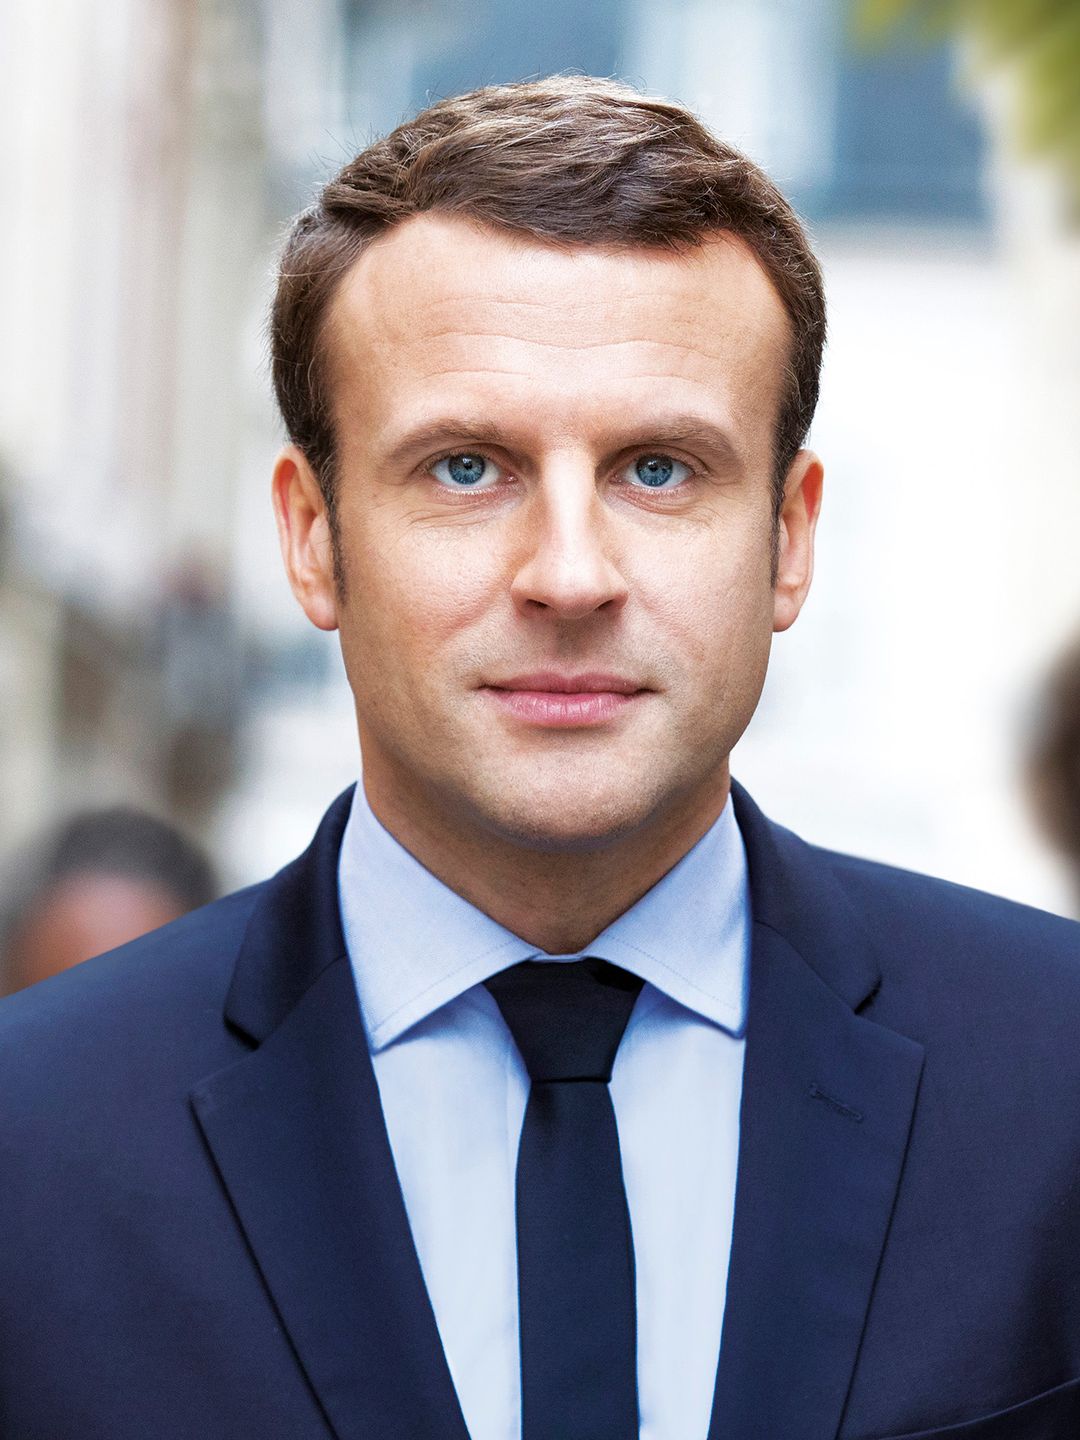 Emmanuel Macron dating history